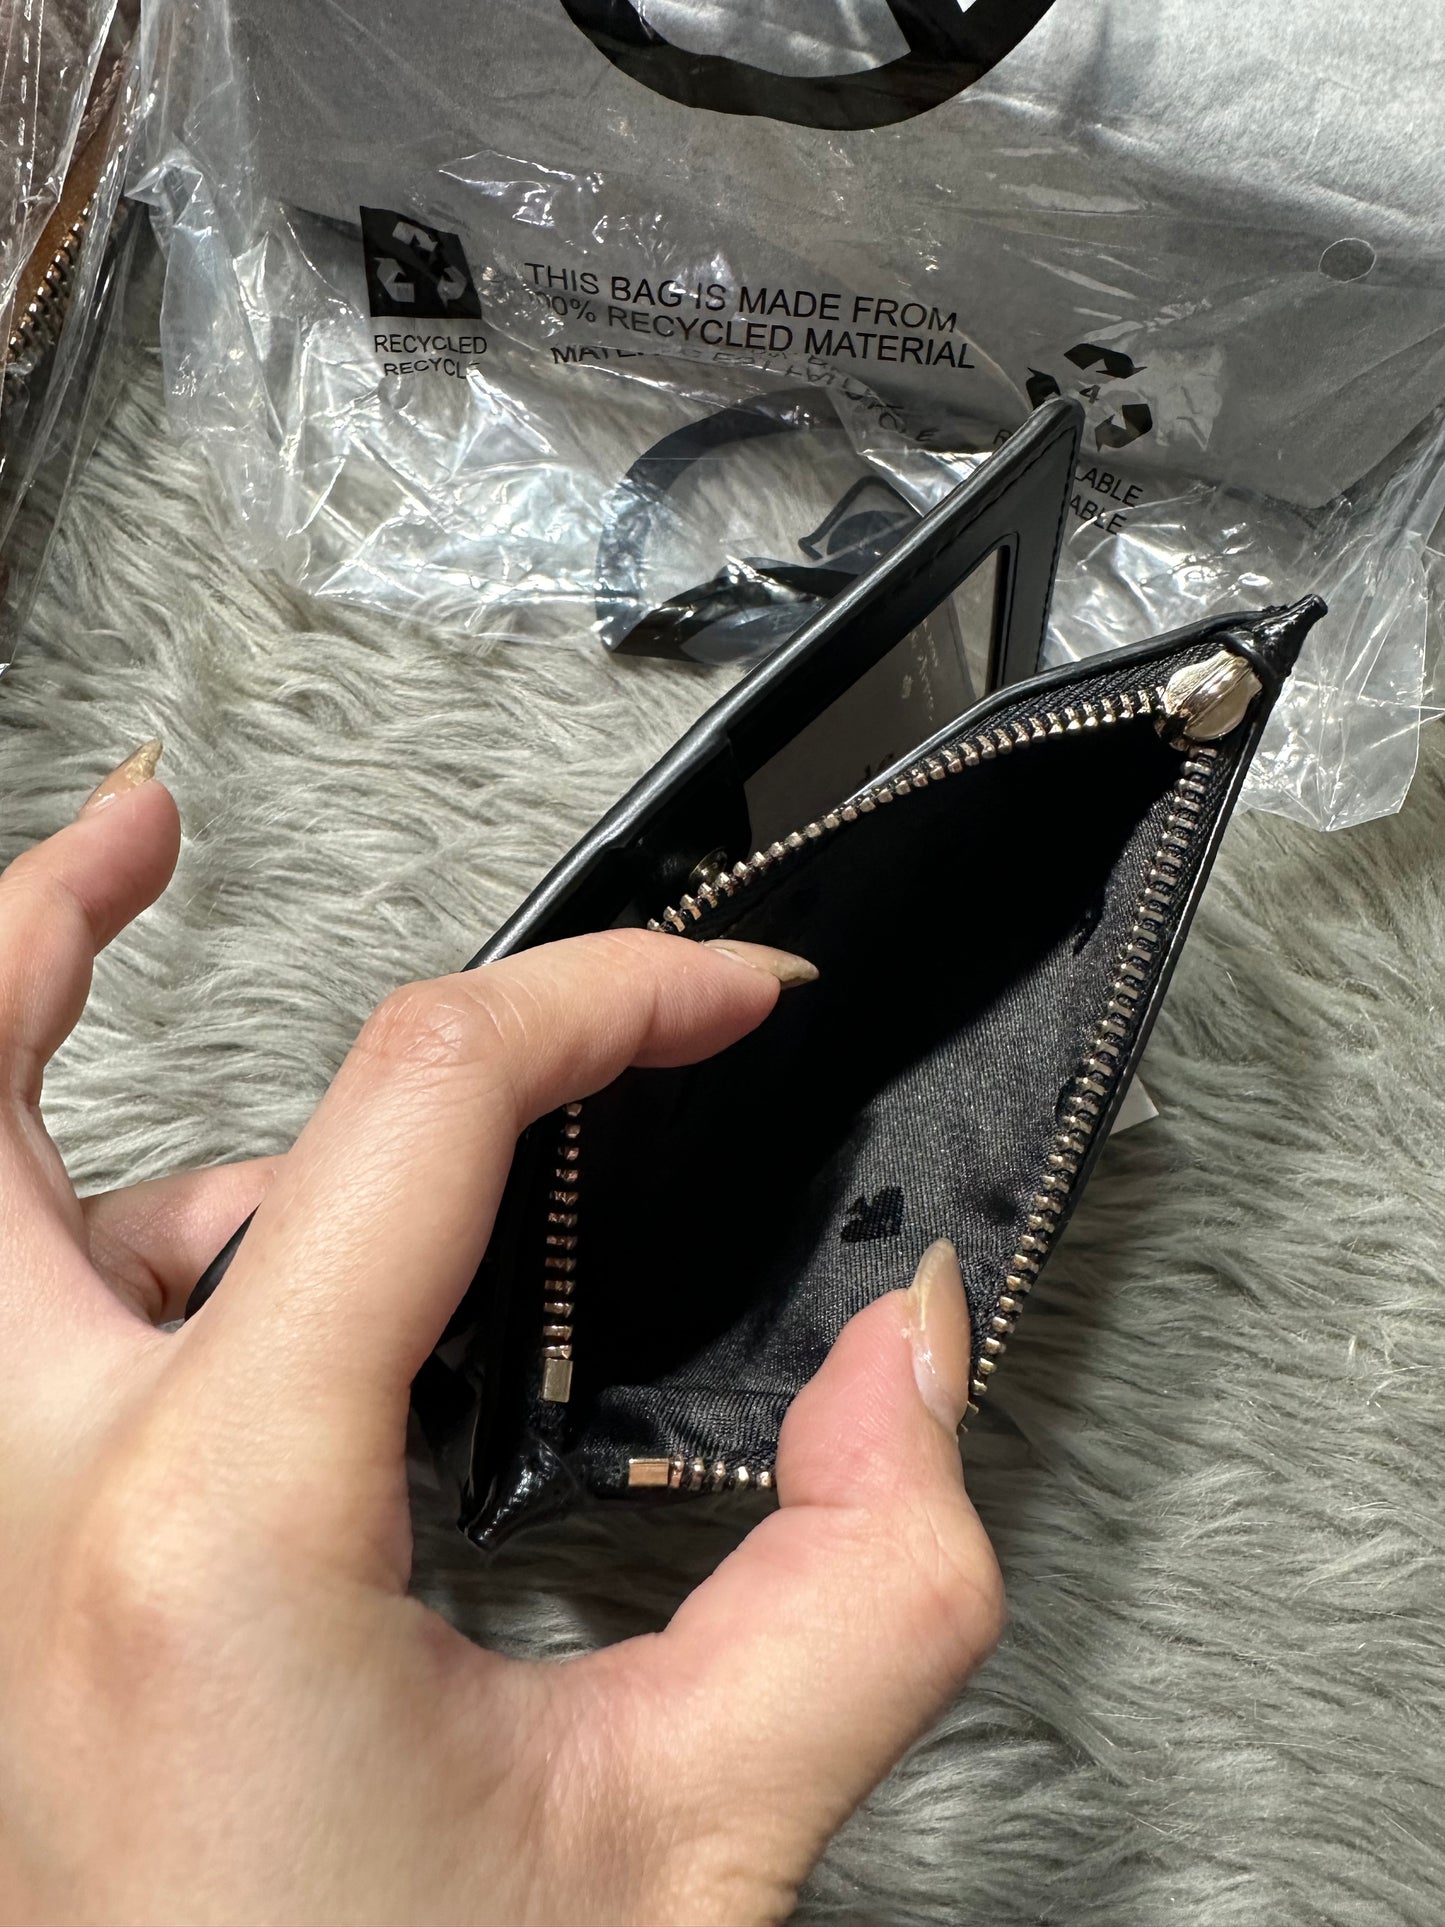 AUTHENTIC/ORIGINAL KateSpade KS Preloved Staci Colorblock Small Slim Bifold Wallet in Warm Beige